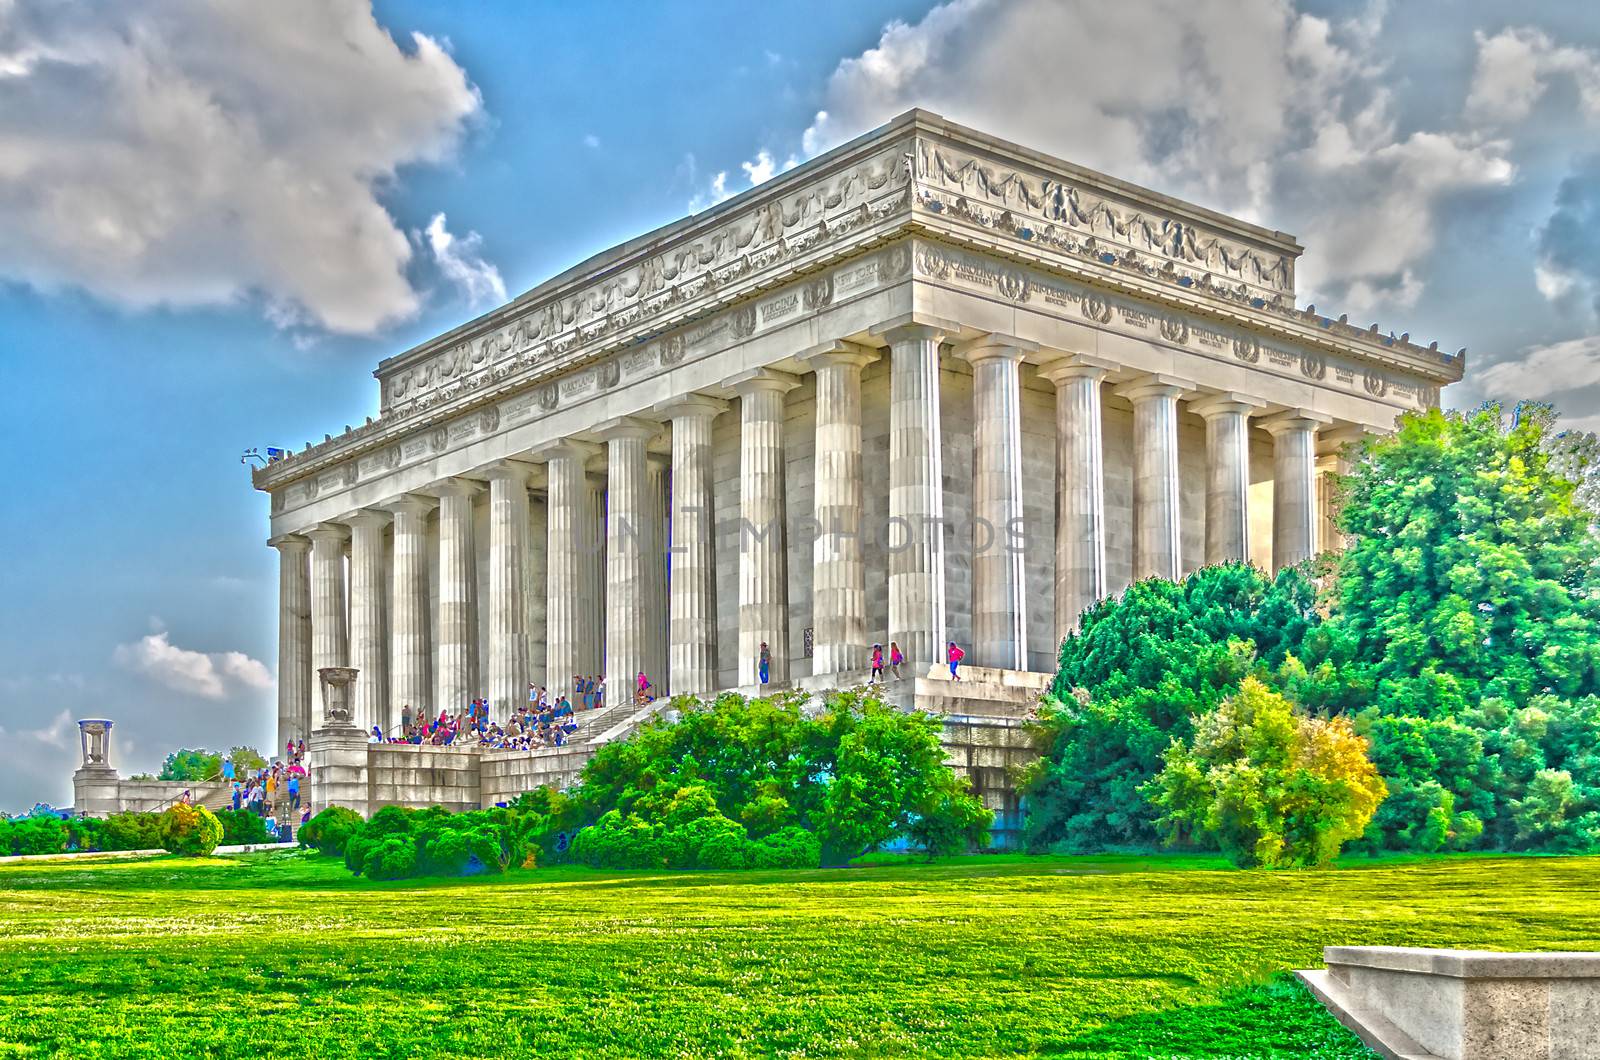 Lincoln Memorial in Washington DC USA  by marcorubino